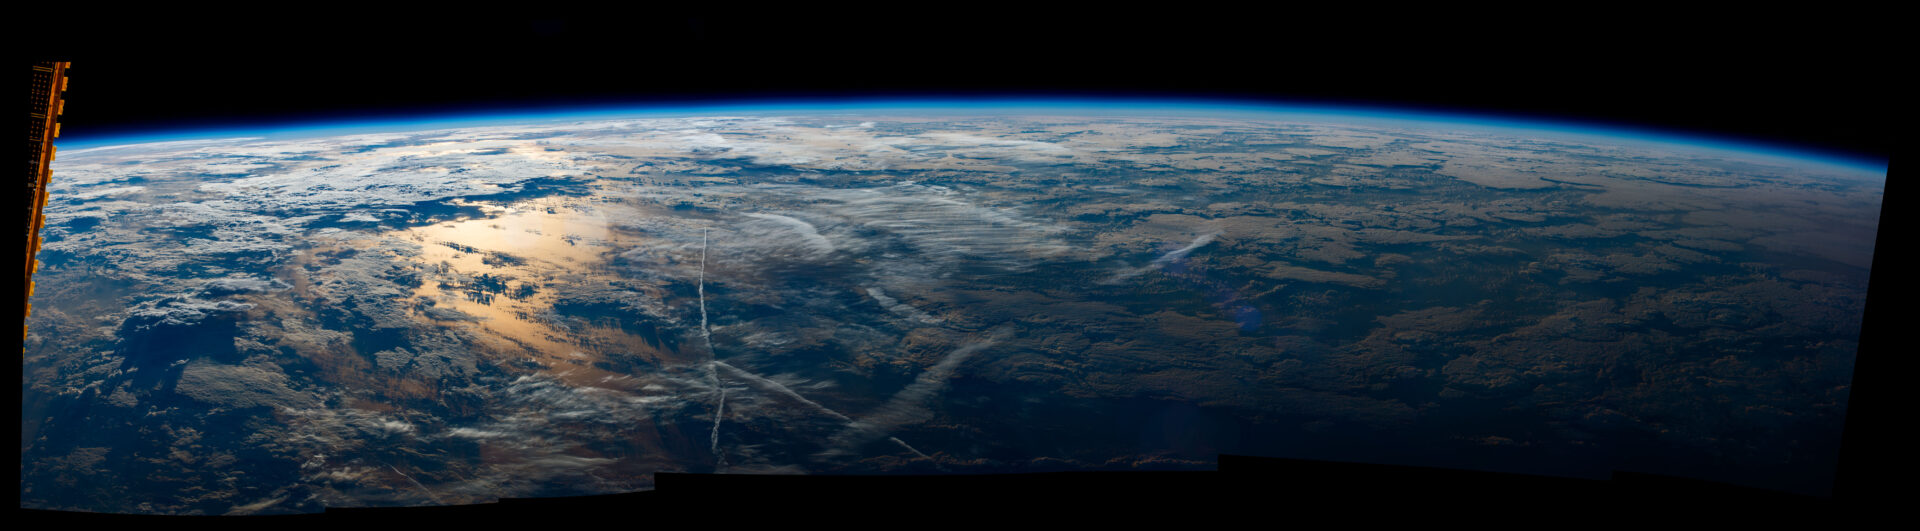 https://horasis.org/wp-content/uploads/2021/05/Earth-NASA.jpeg